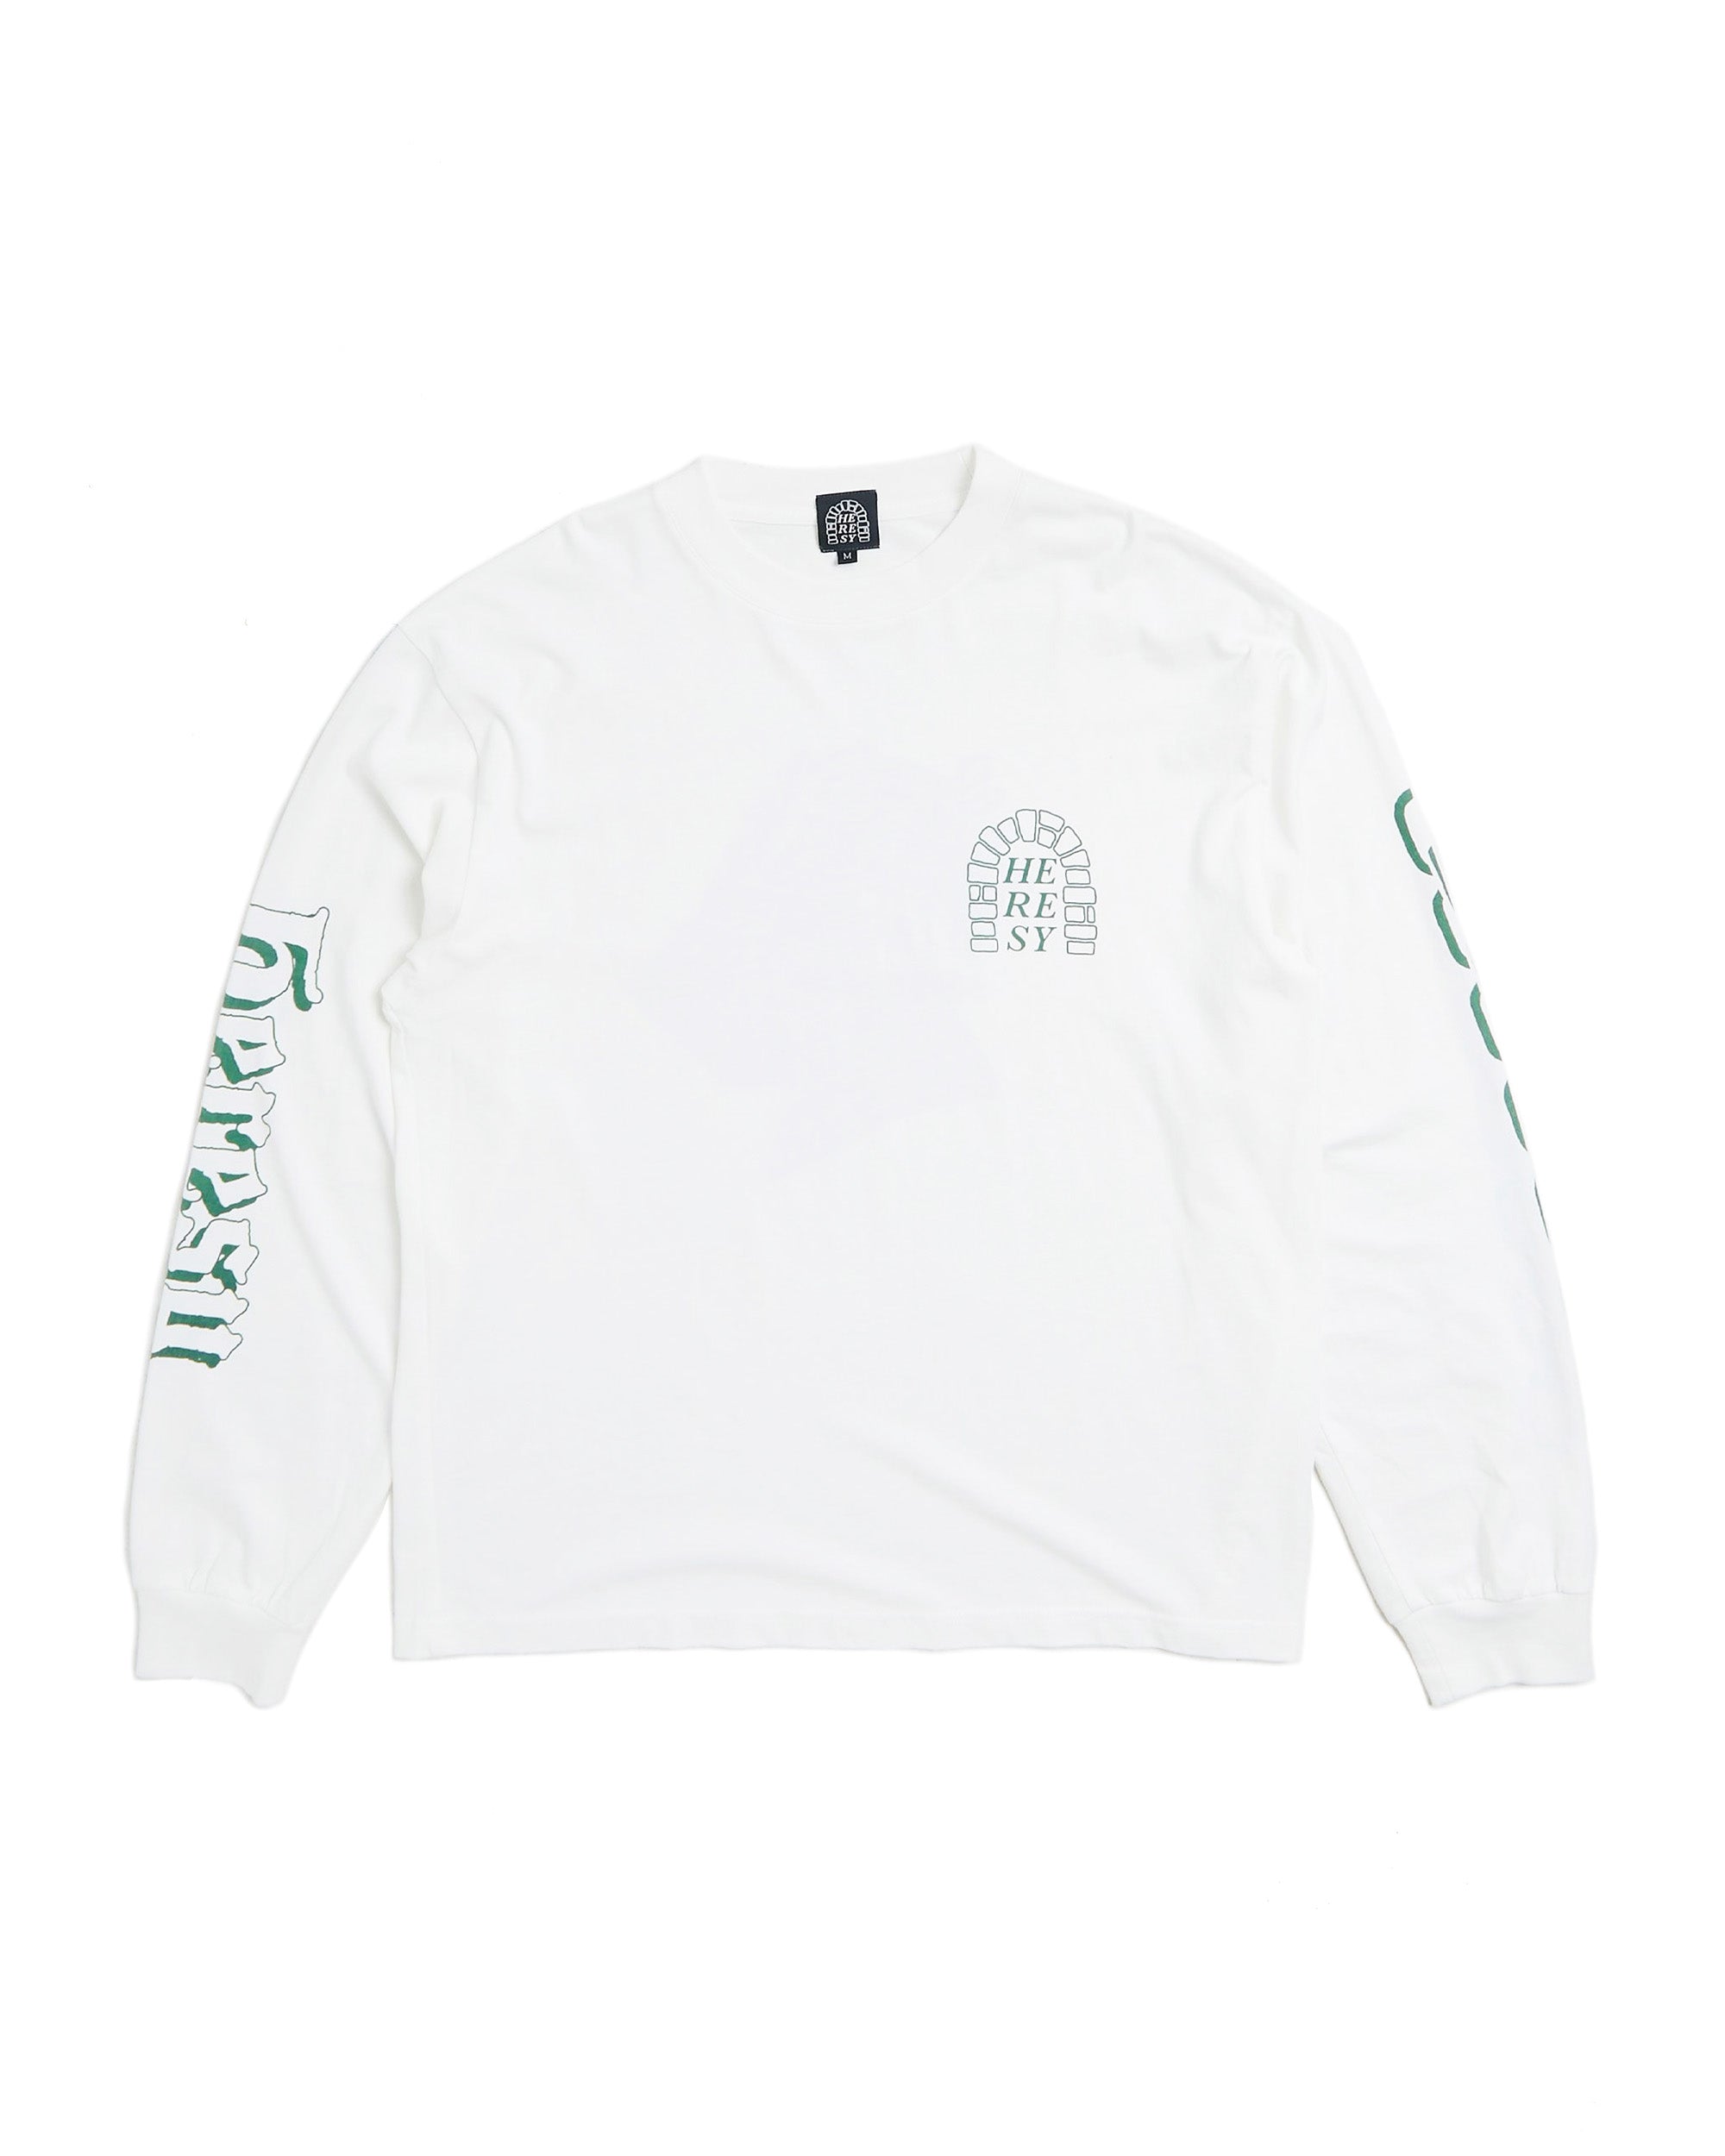 Green Knight L/S T-Shirt - White